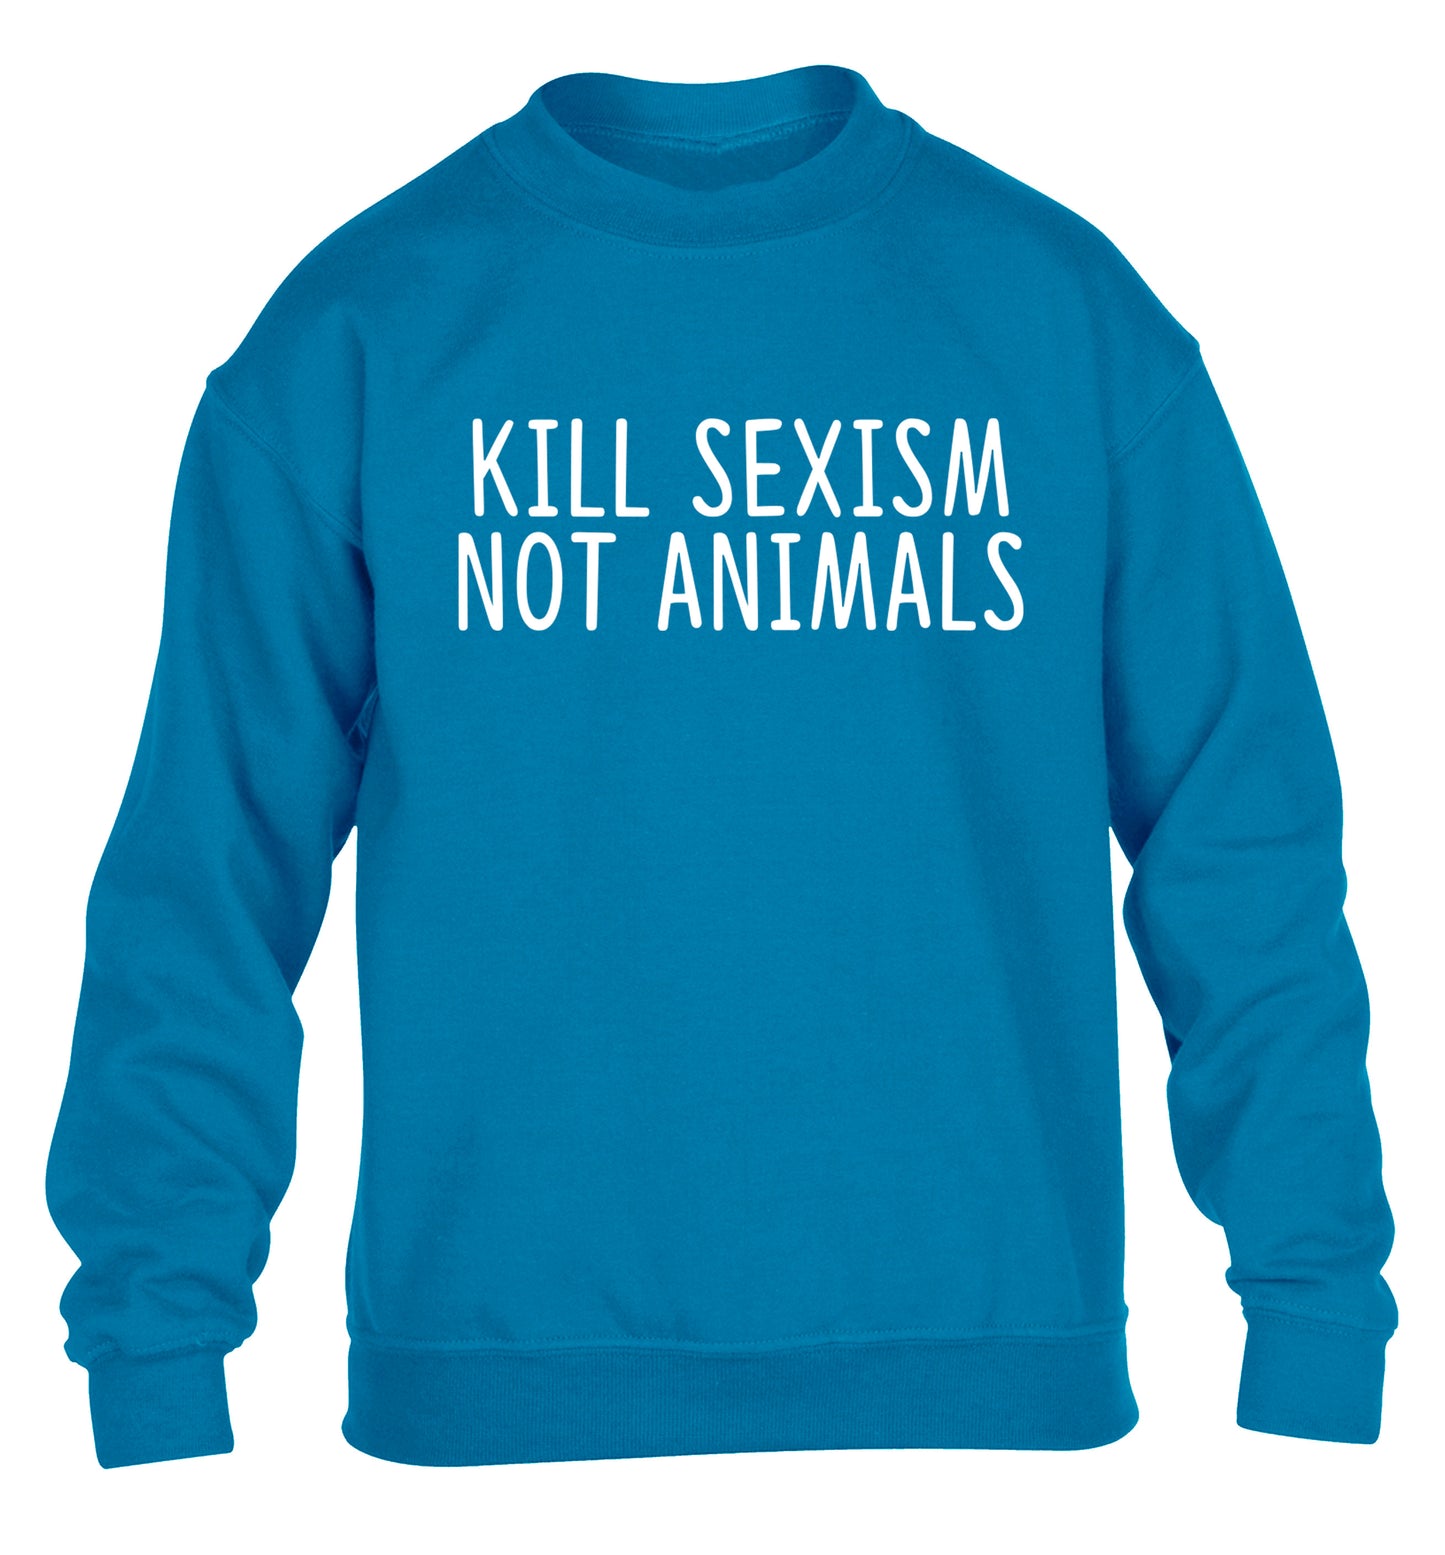 Kill Sexism Not Animals children's blue sweater 12-13 Years